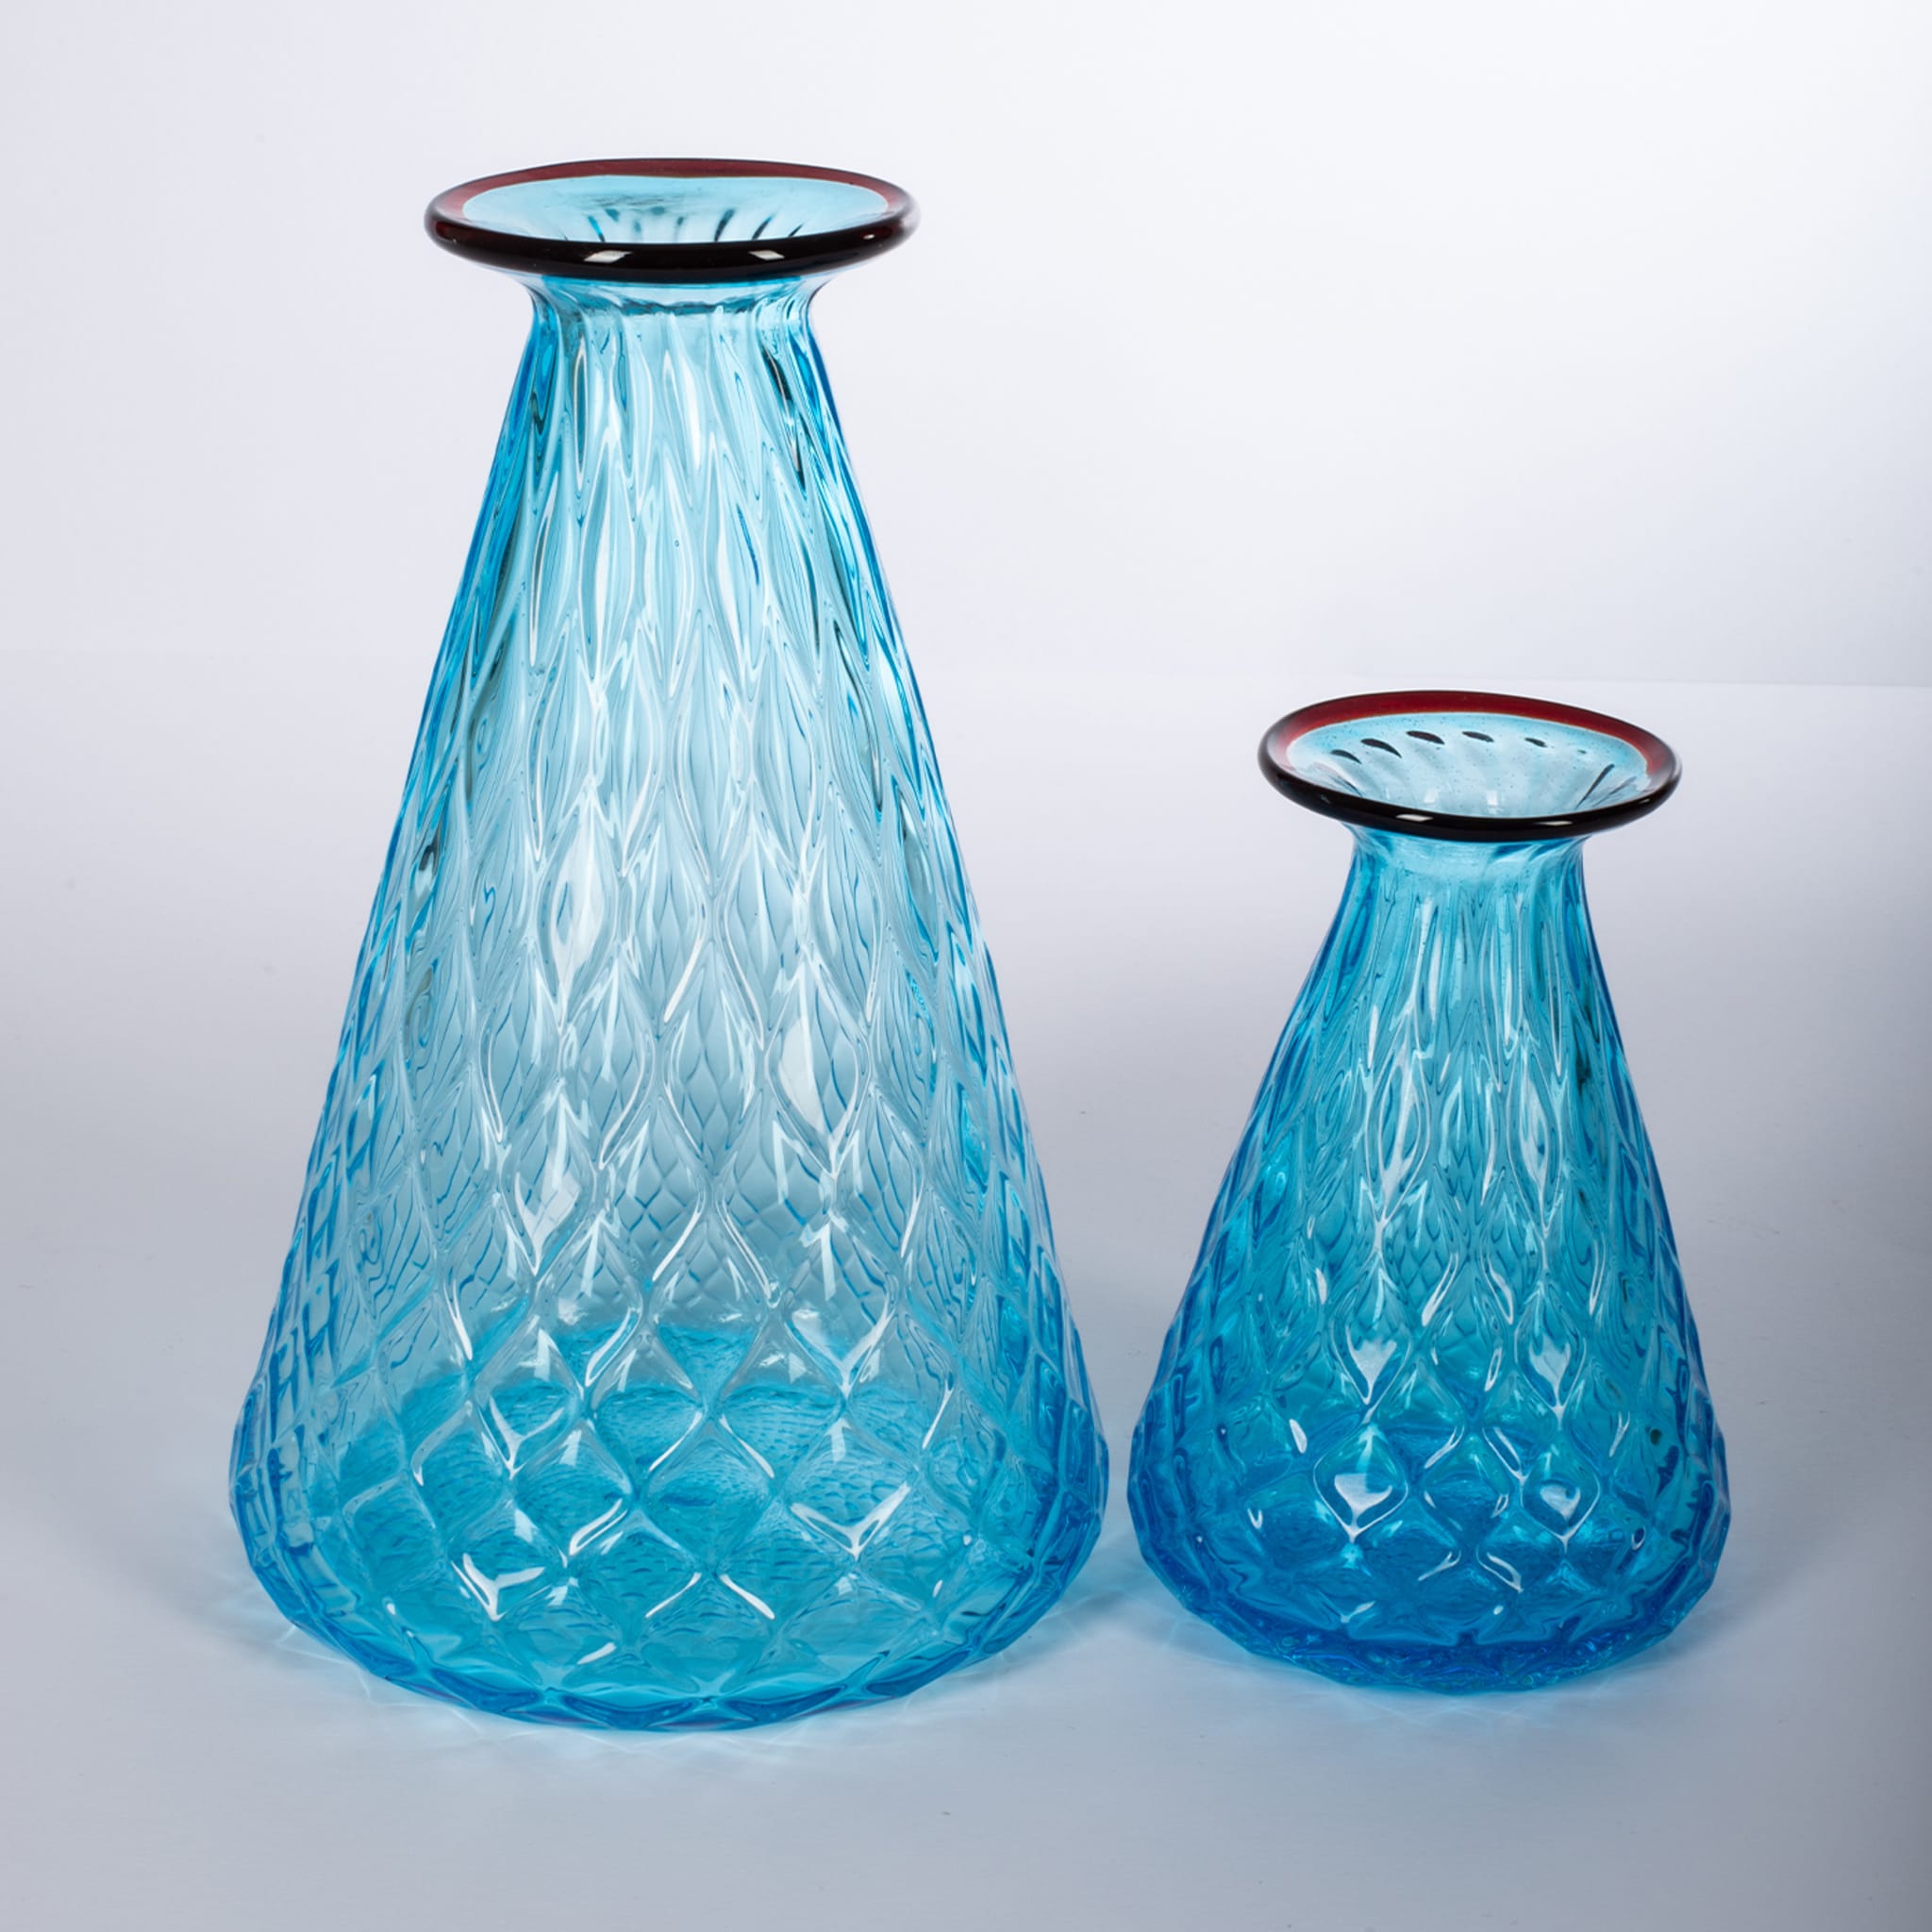 Acqua Mare Balloton Set of 2 Conical Azure Vases - Alternative view 1